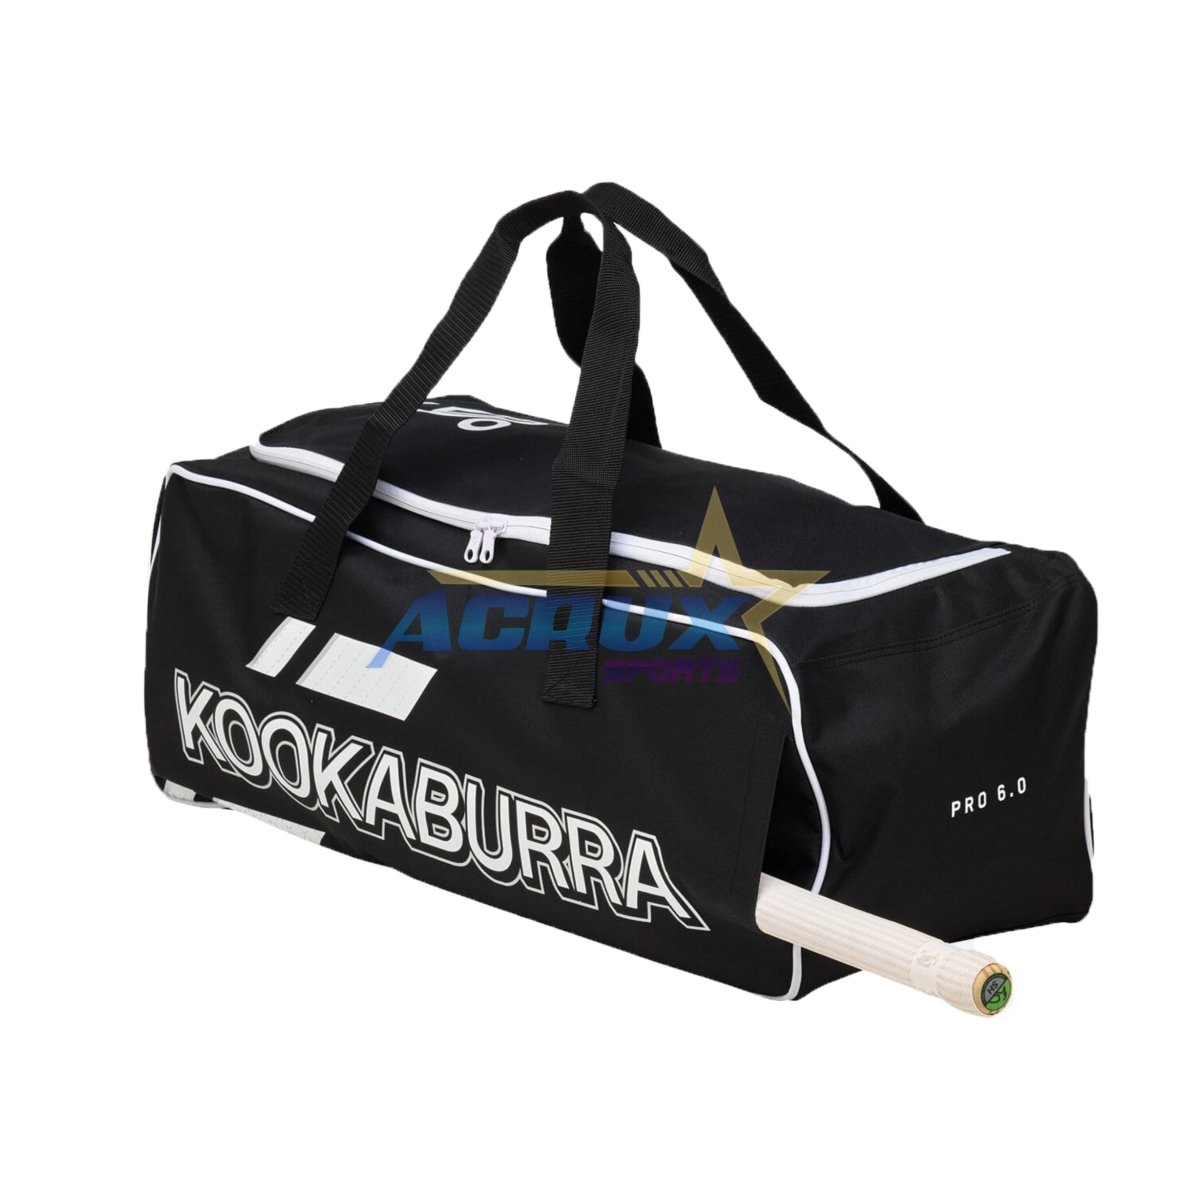 Kookaburra Holdall 6.0 Cricket Bag